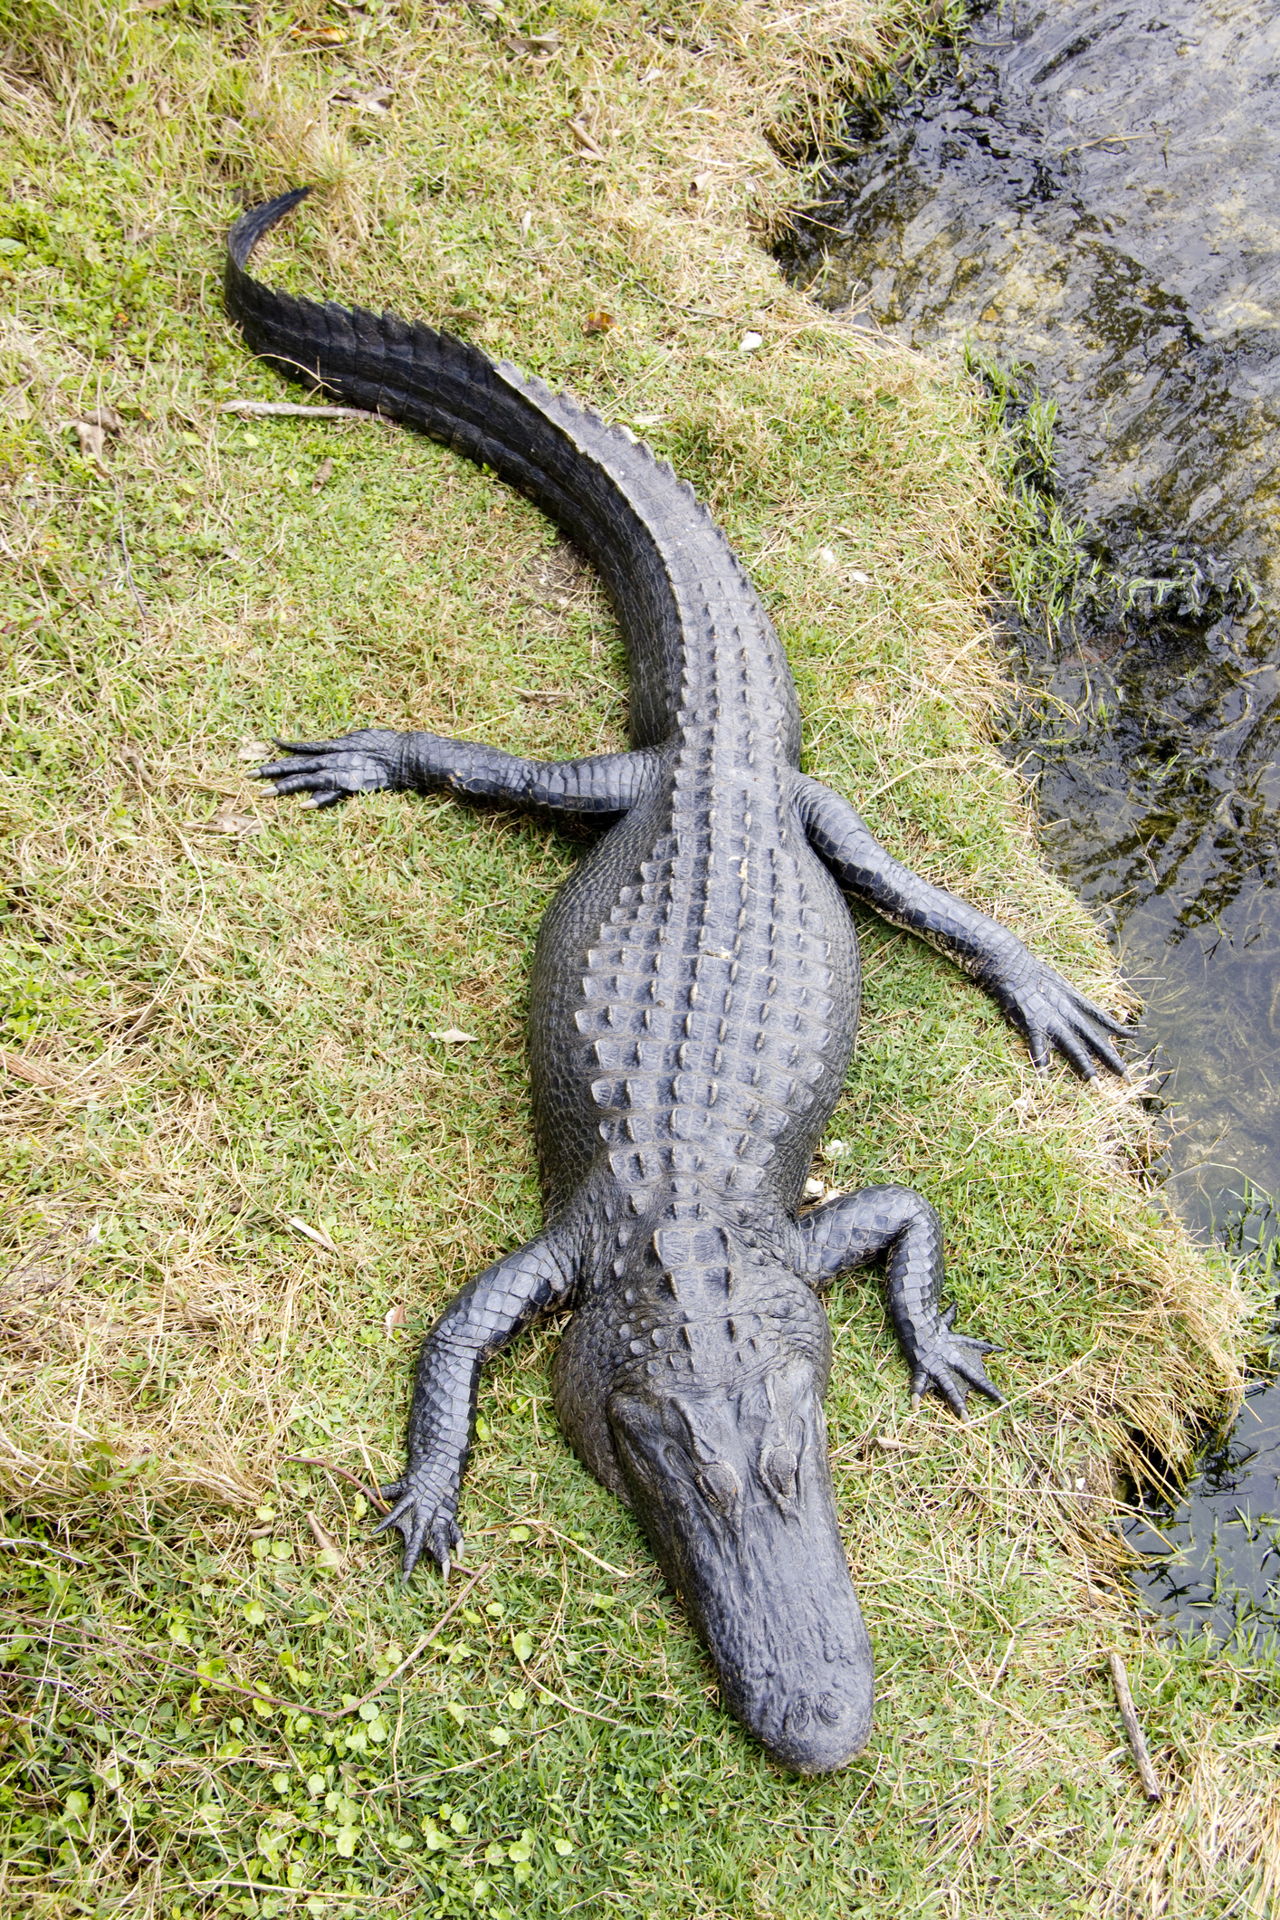 The World's Largest Gators — Google Sightseeing